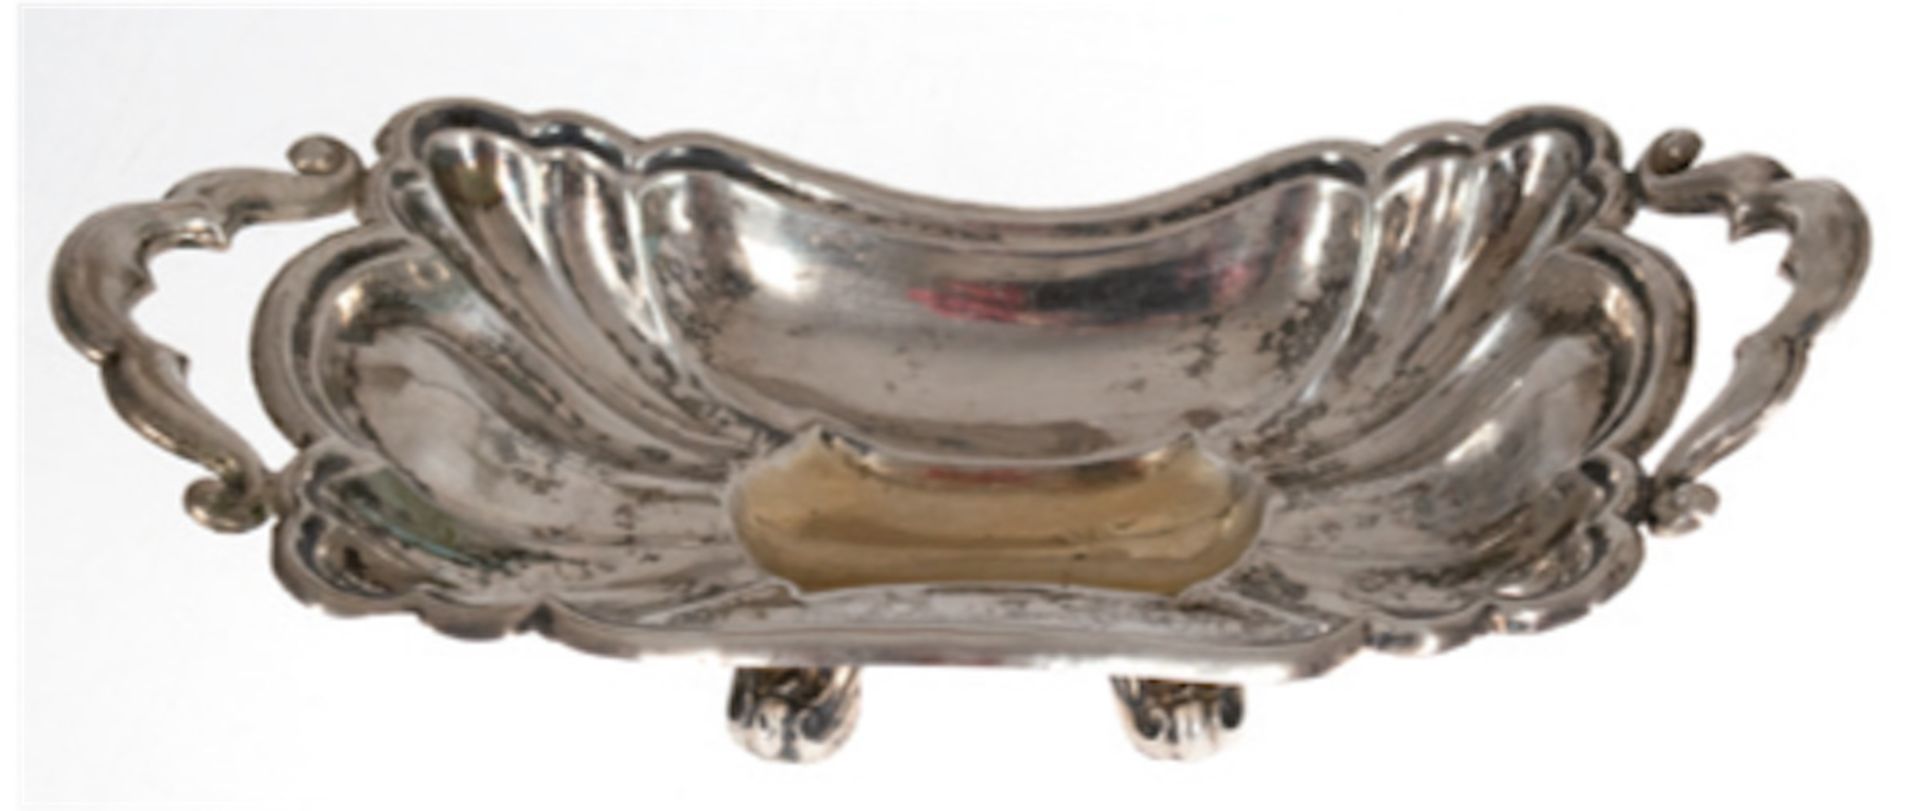 Biedermeier-Schale, Silber, geprüft, ca. 105 g, rechteckige geschweifte Form mitbeidseitigen